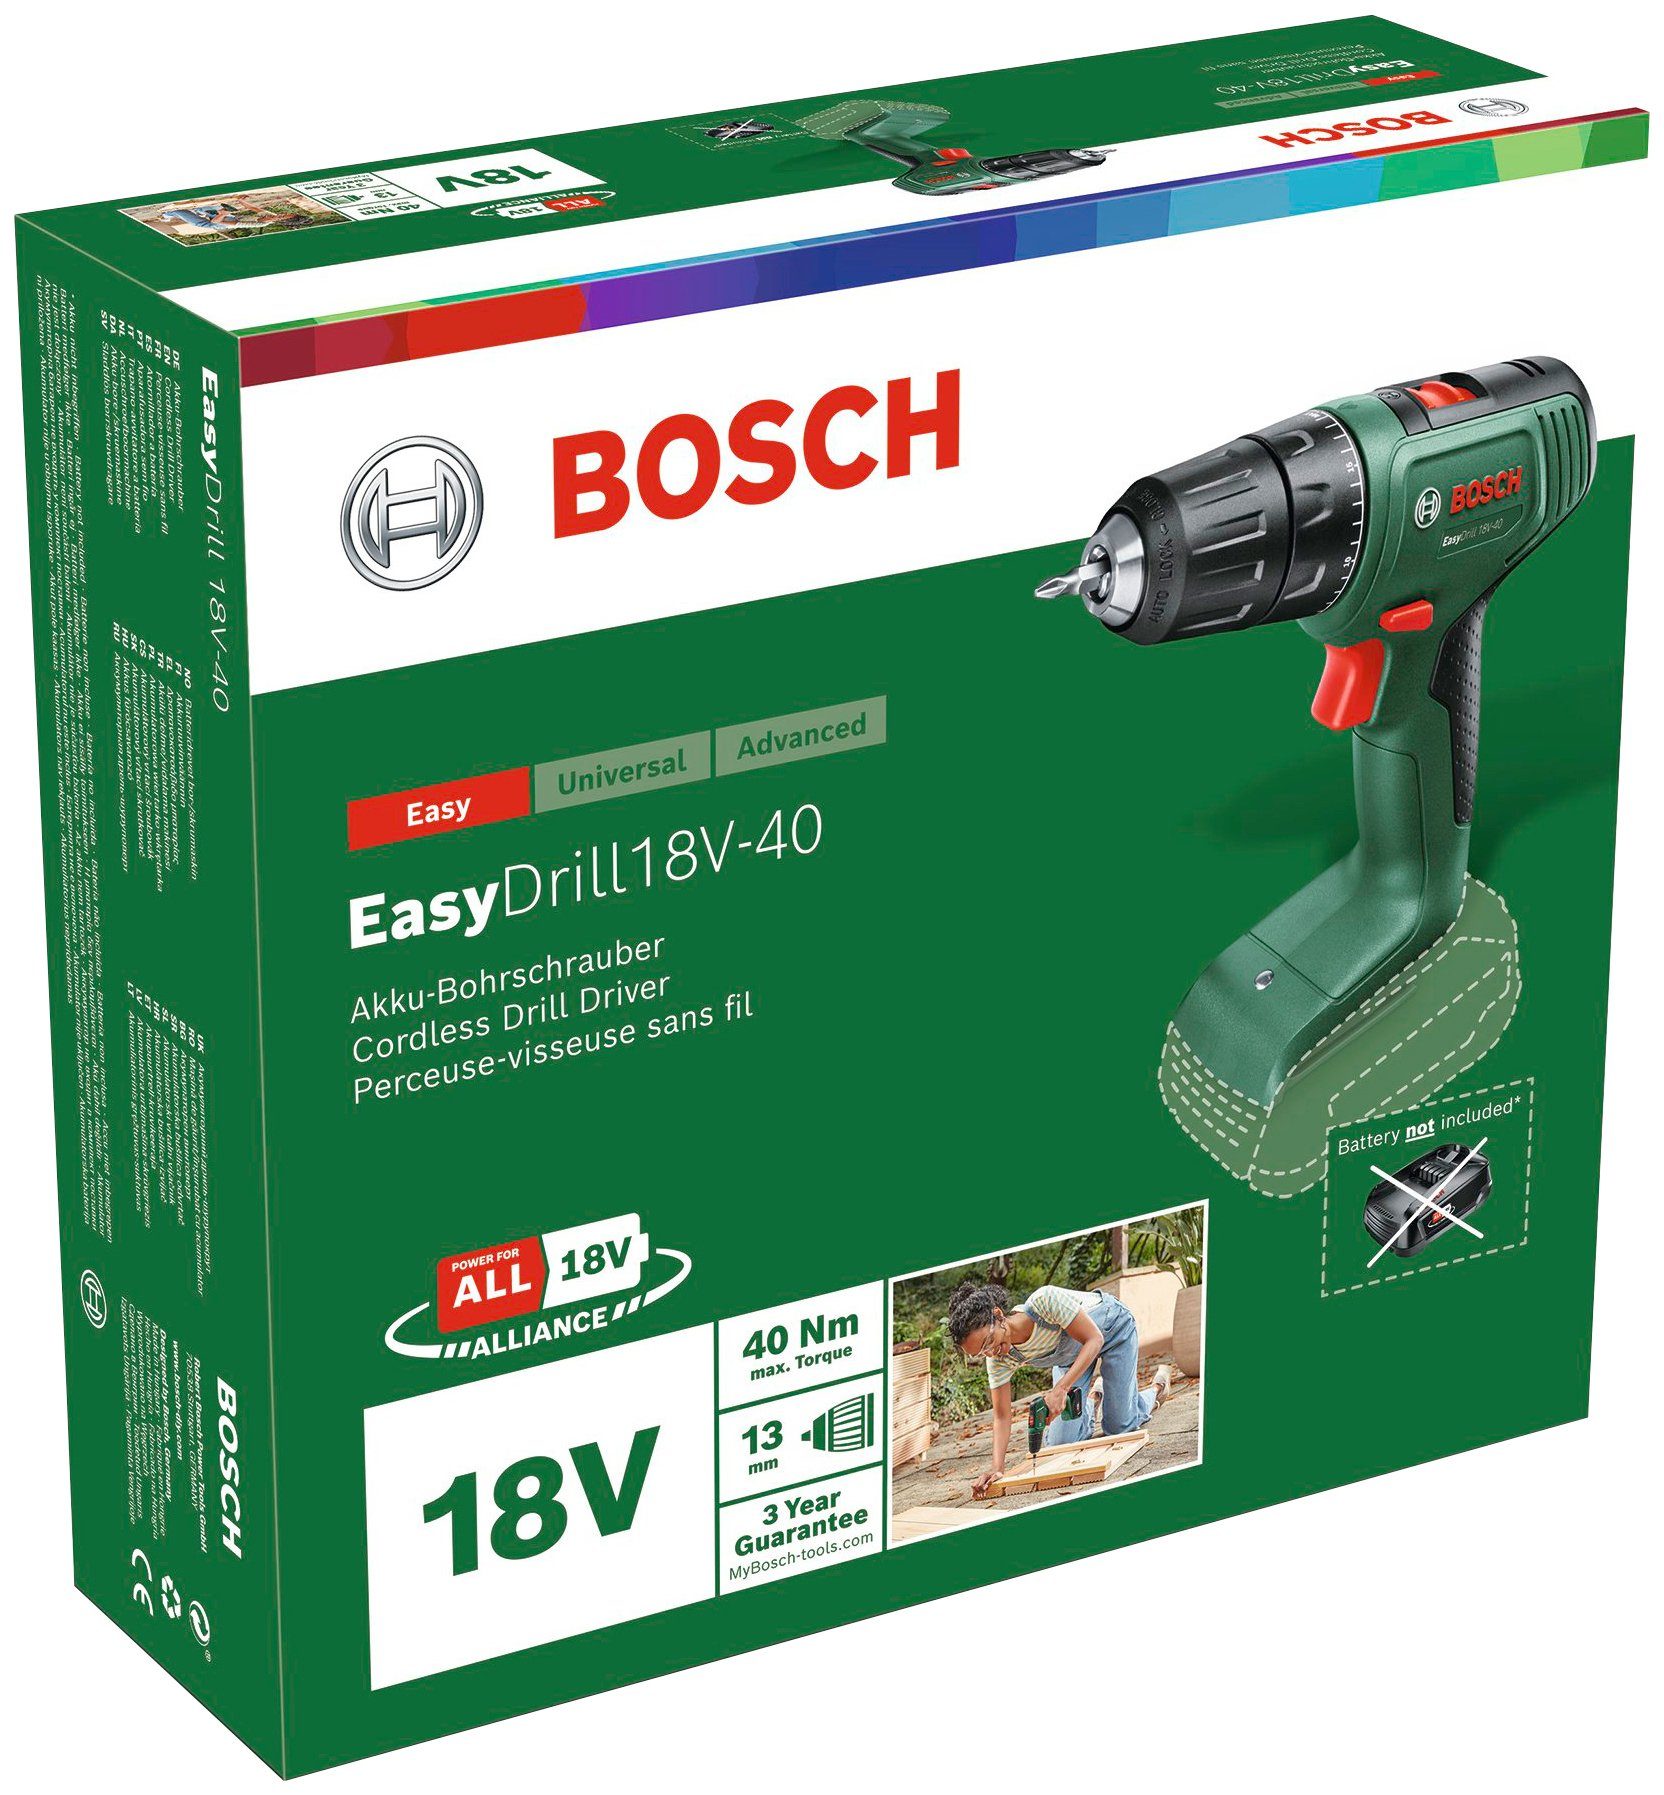 Bosch Home und Easydrill Akku-Bohrschrauber ohne Garden Ladegerät, Akku & System Volt 18V-40, 18